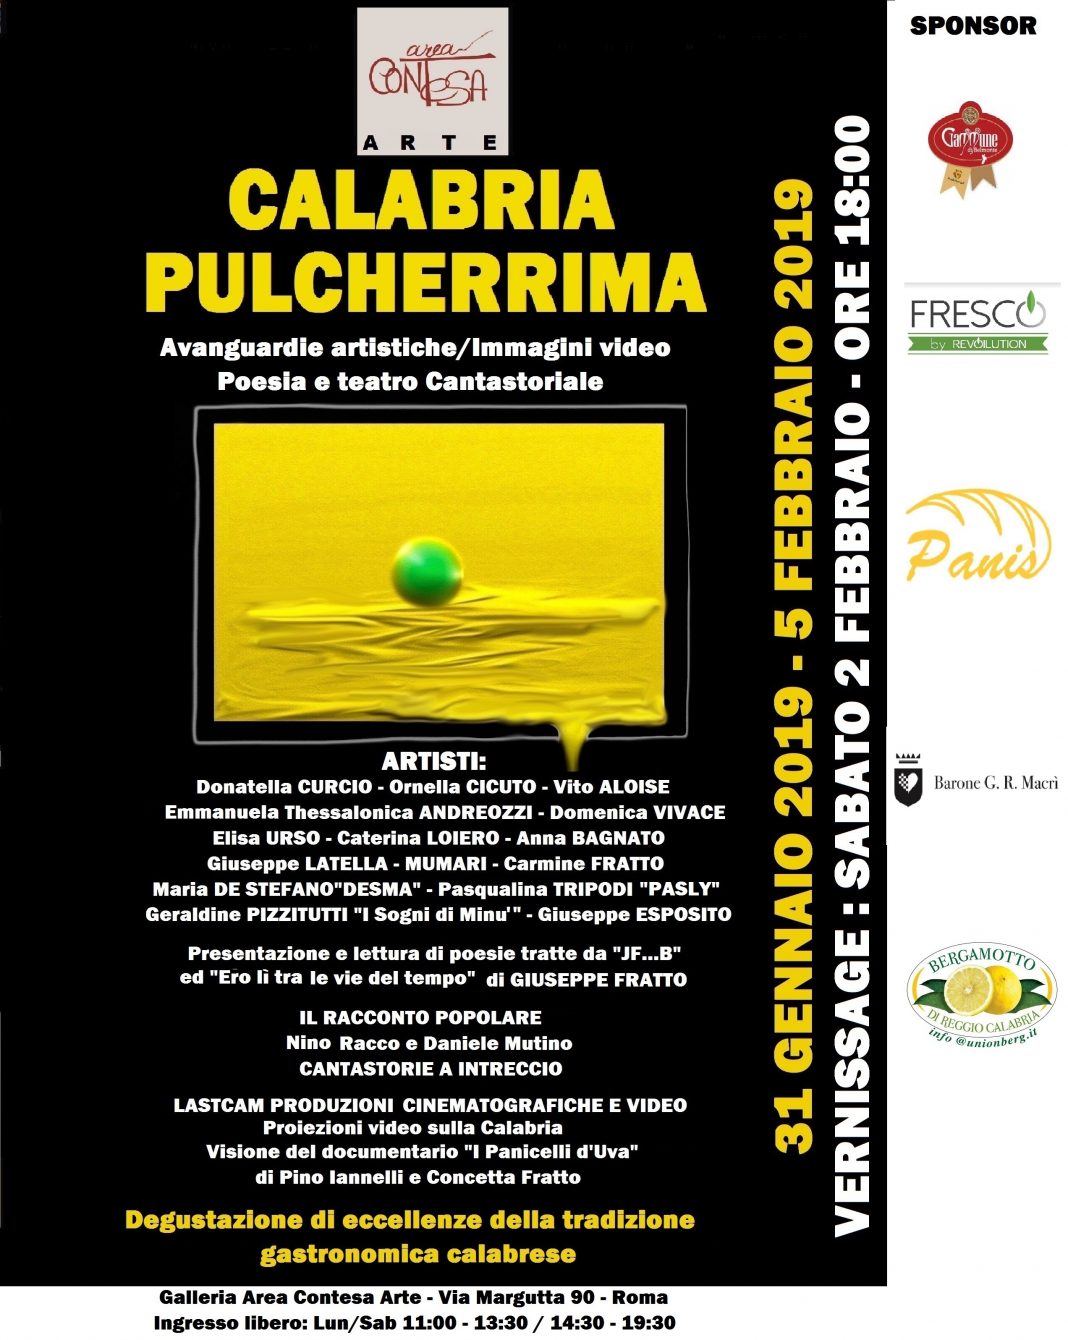 Calabria Pulcherrimahttps://www.exibart.com/repository/media/eventi/2019/01/calabria-pulcherrima-1068x1340.jpg